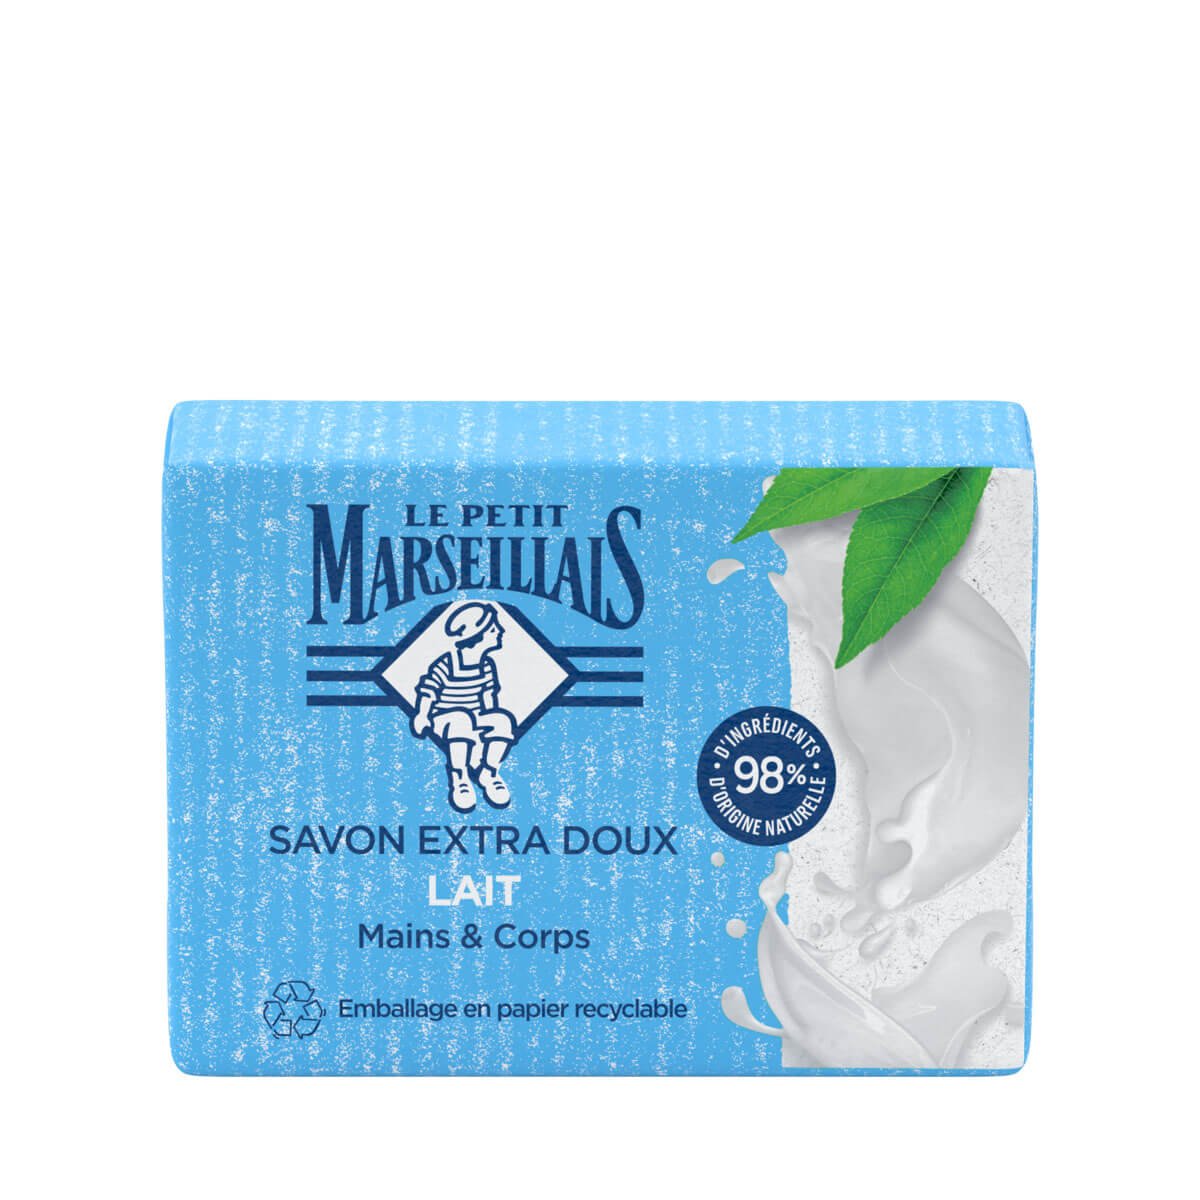 LE PETIT MARSEILLAIS Extra Gentle Milk Hand and Body Soap 200g -J71